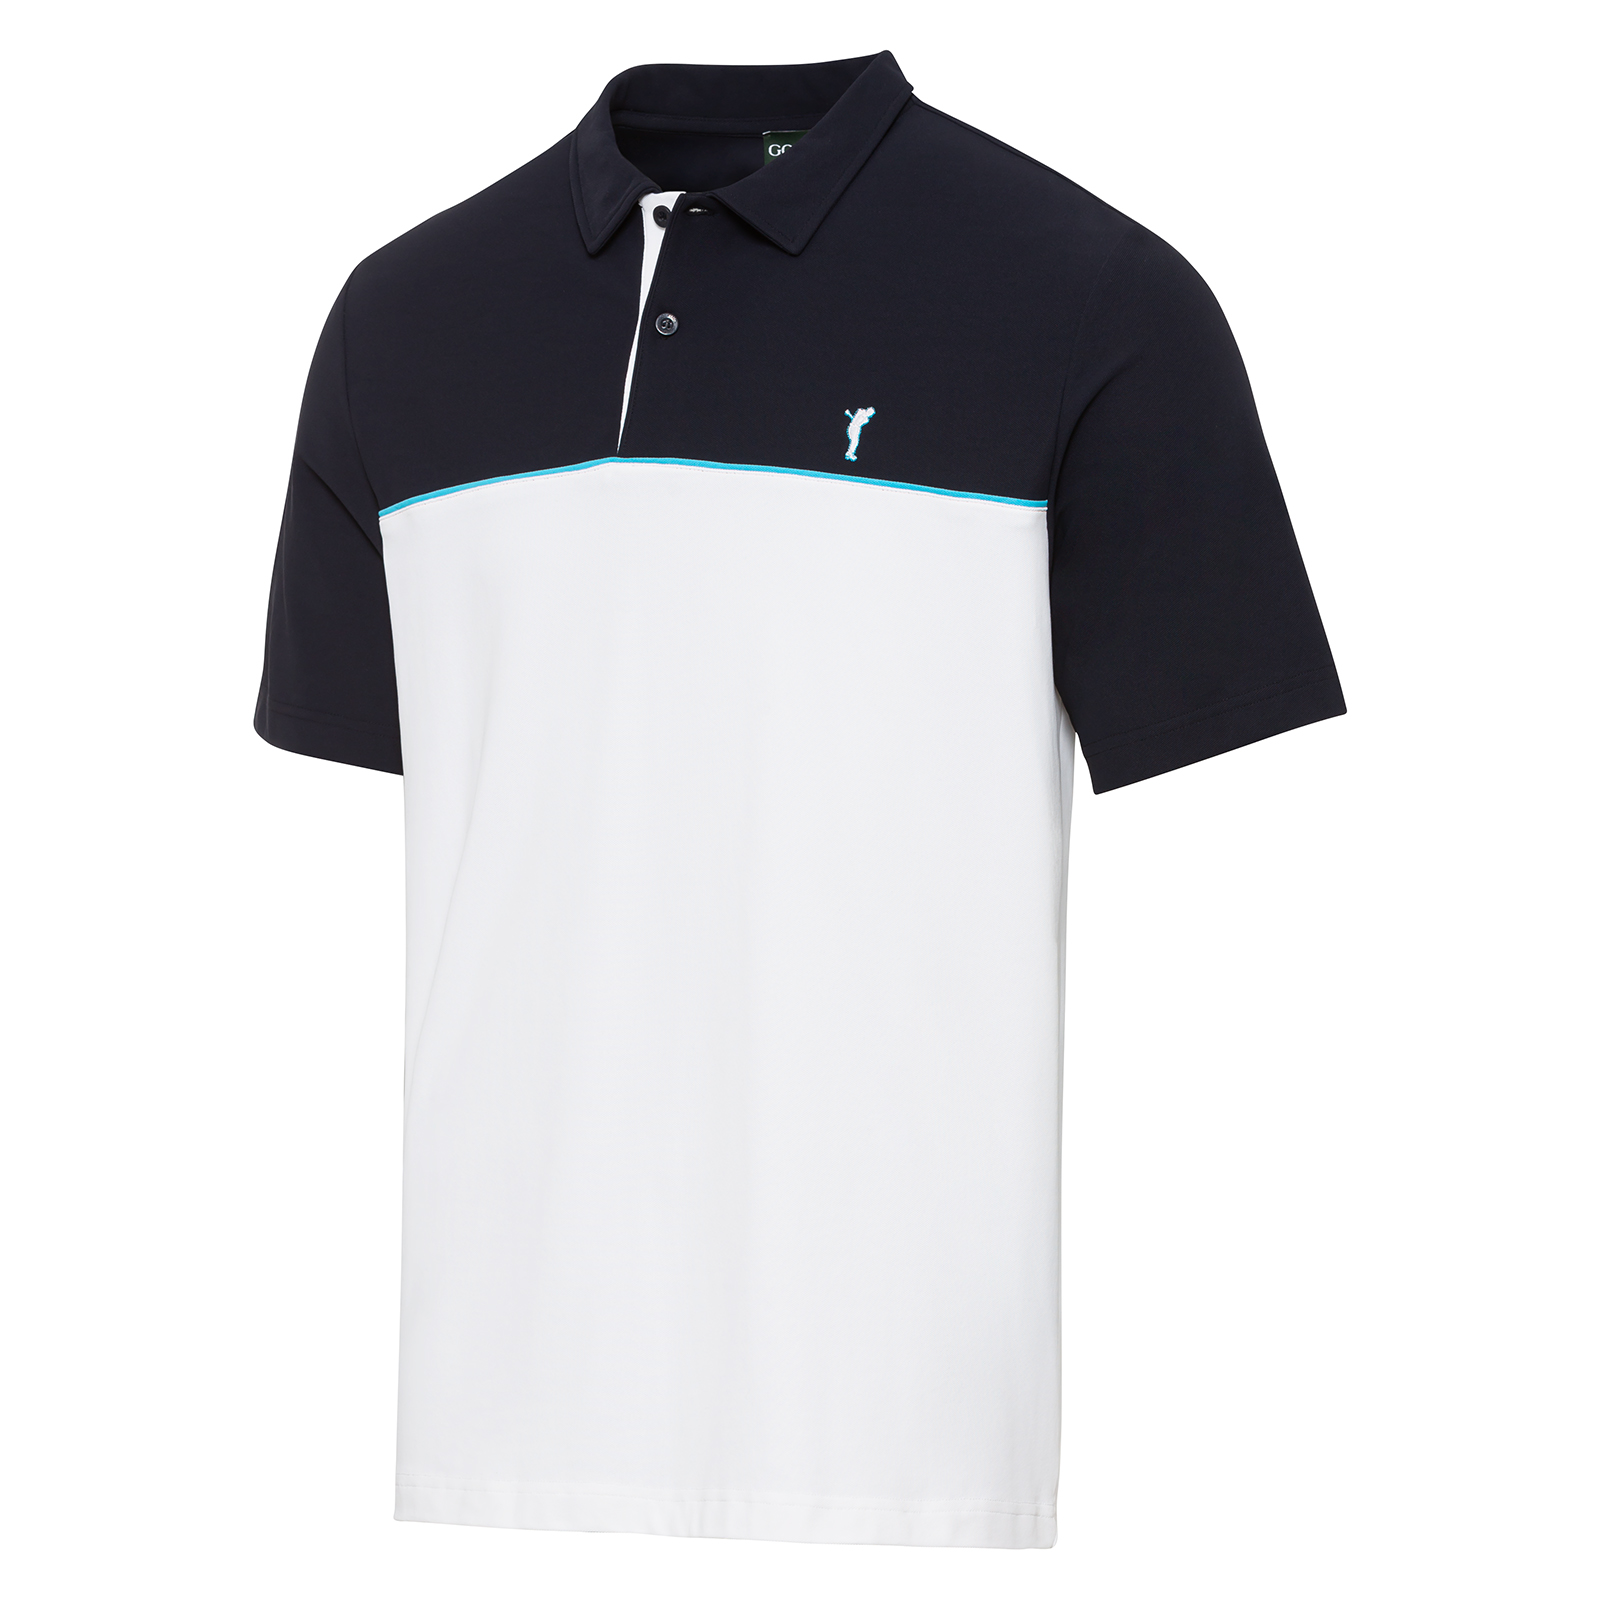 Men's breathable golf polo shirt